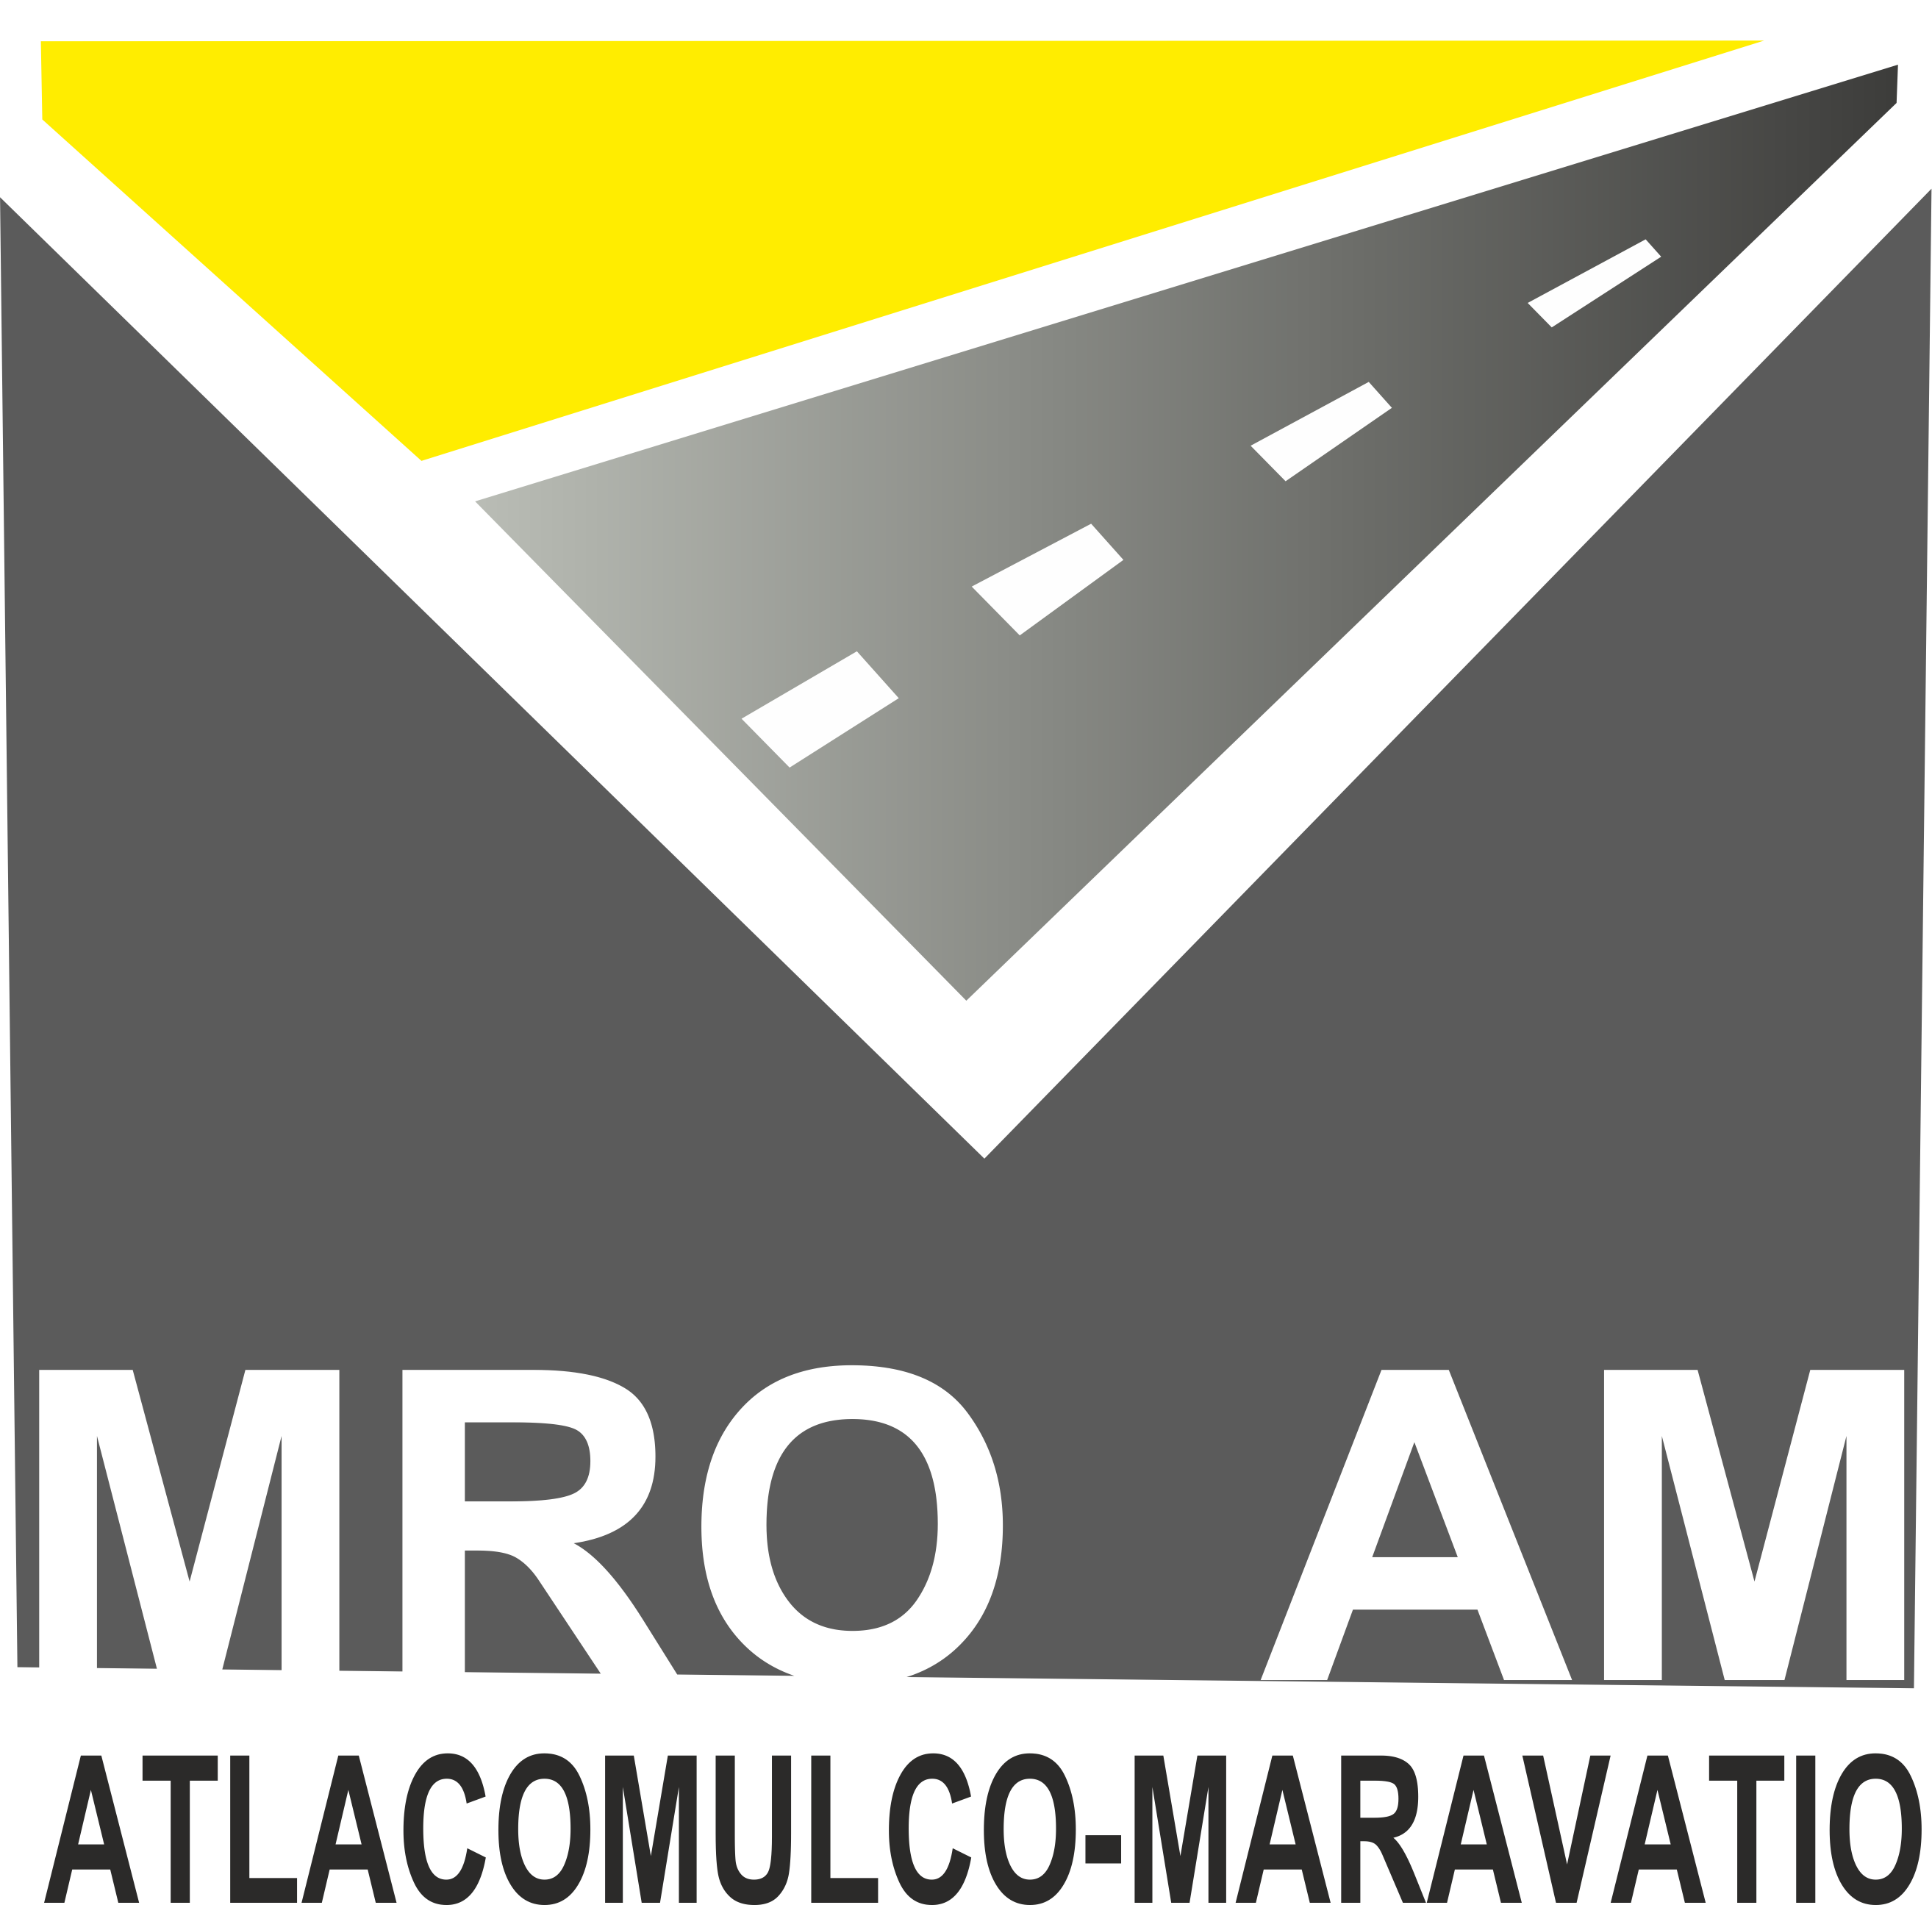 Atlacomulco-Maravatío